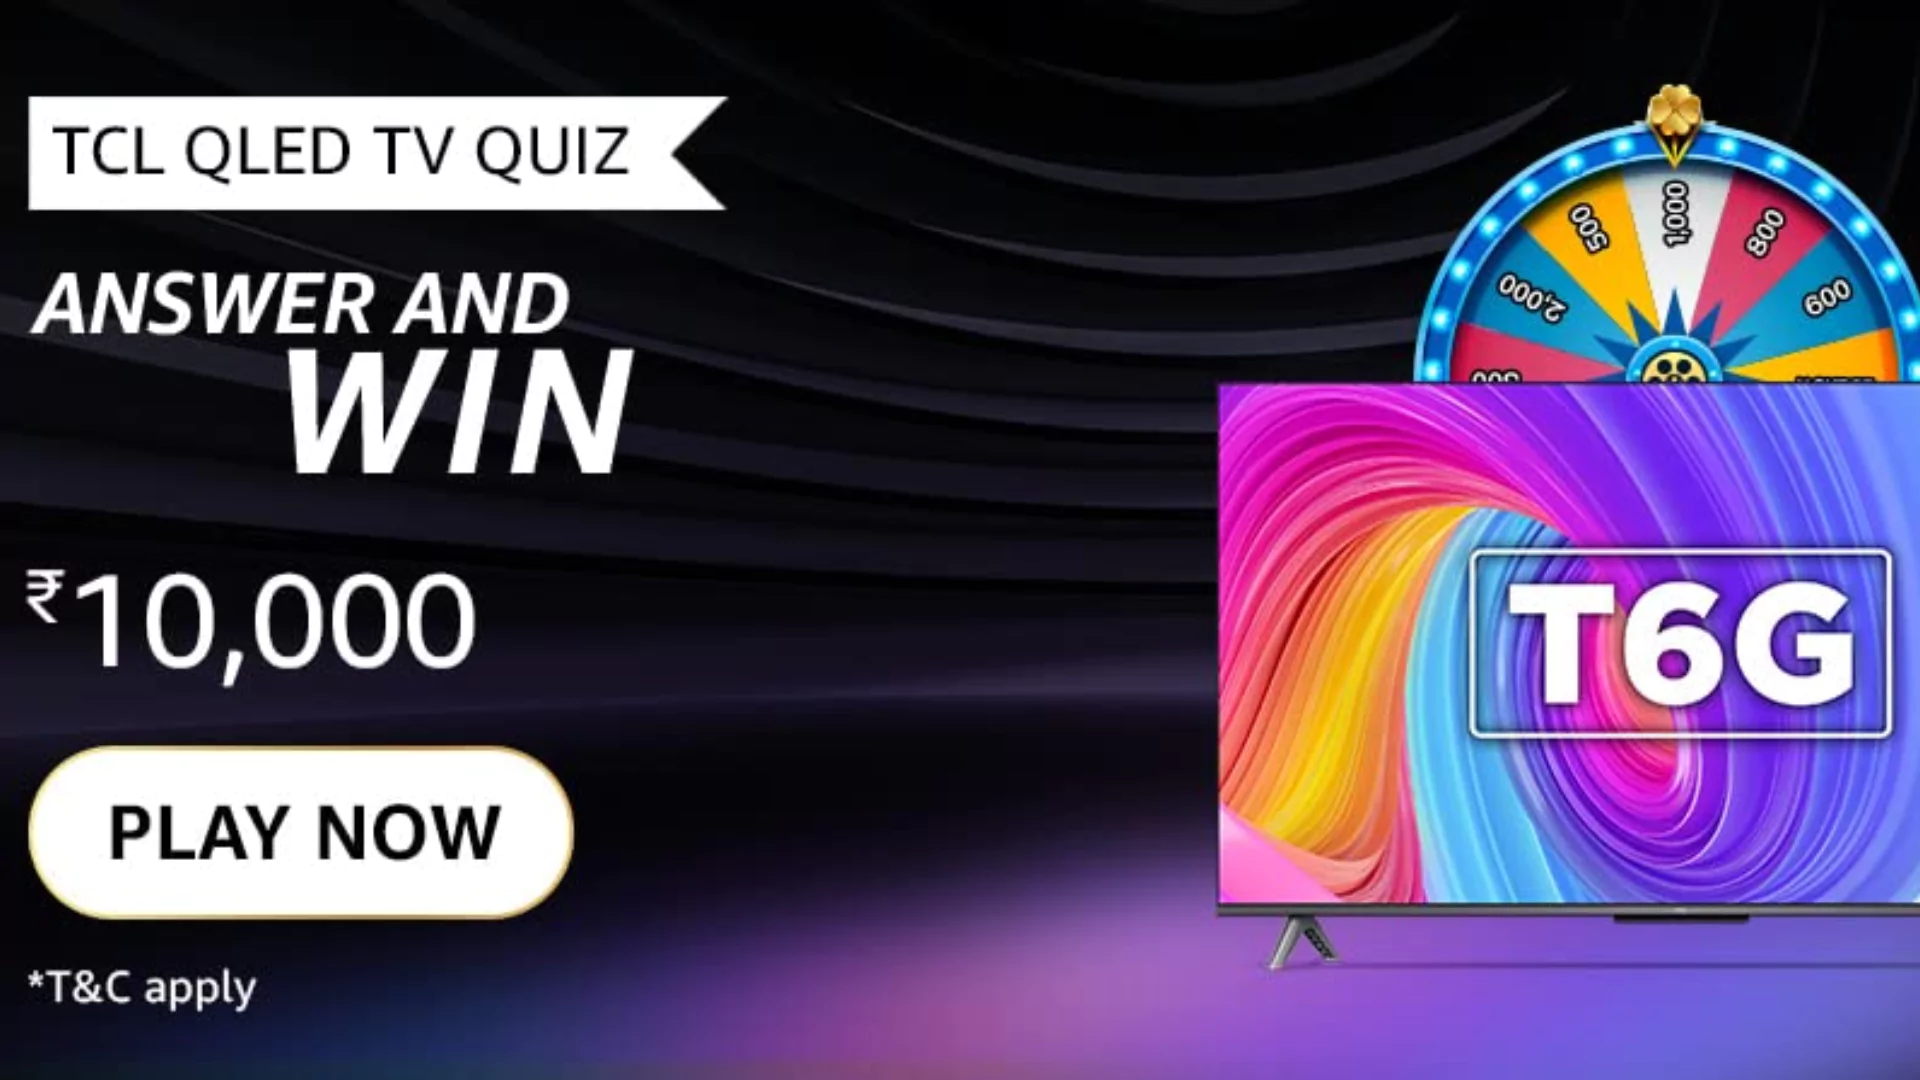 Amazon TCL QLED TV Quiz: Win Rs 10,000 Pay Balance